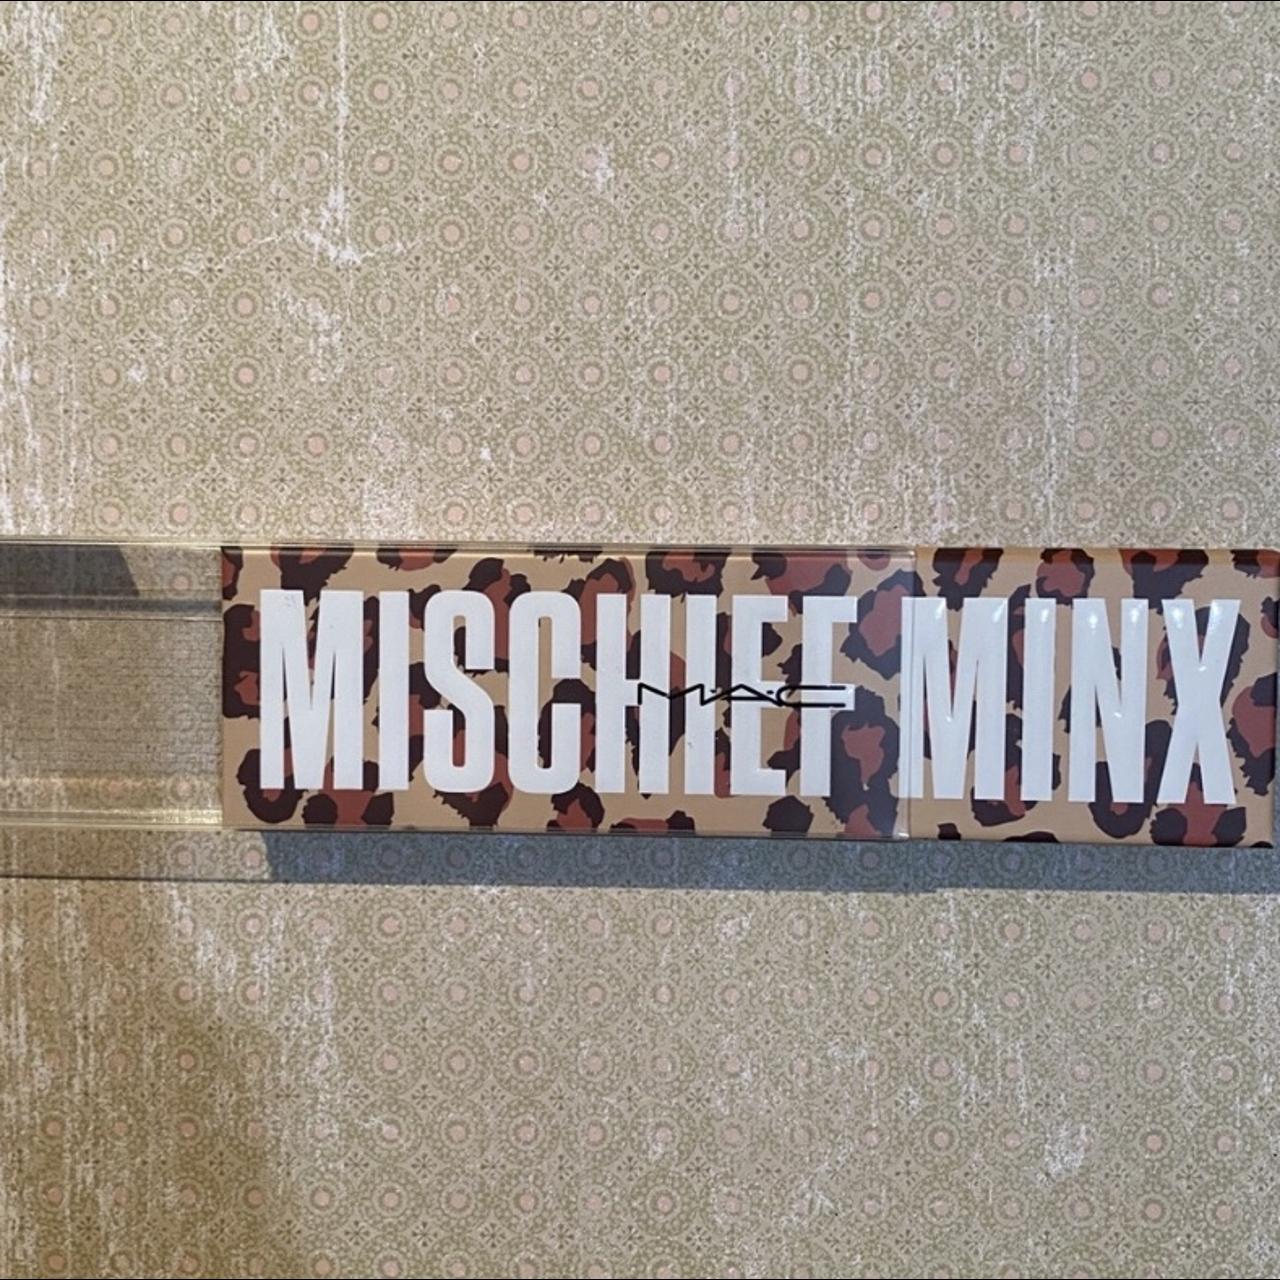 Product Image 3 - NEW MAC Mischief minx eyeshadow